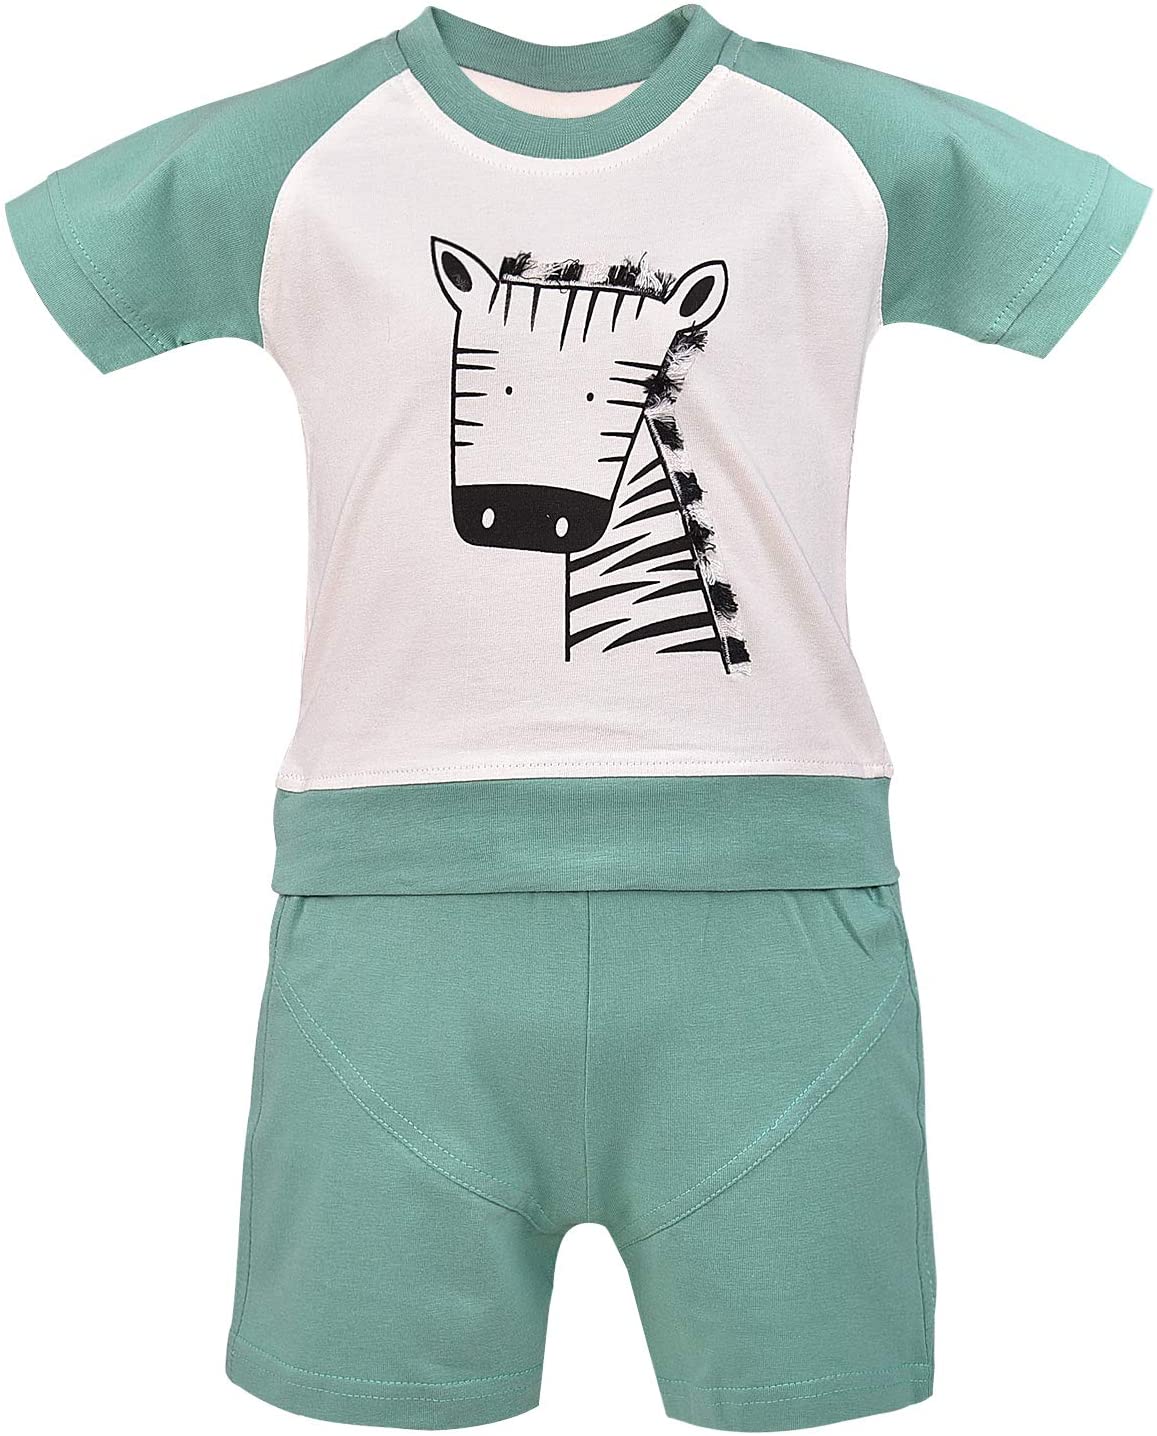 Wish Karo Unisex Clothing Sets for Boys & Baby Girls-(bt24grn)